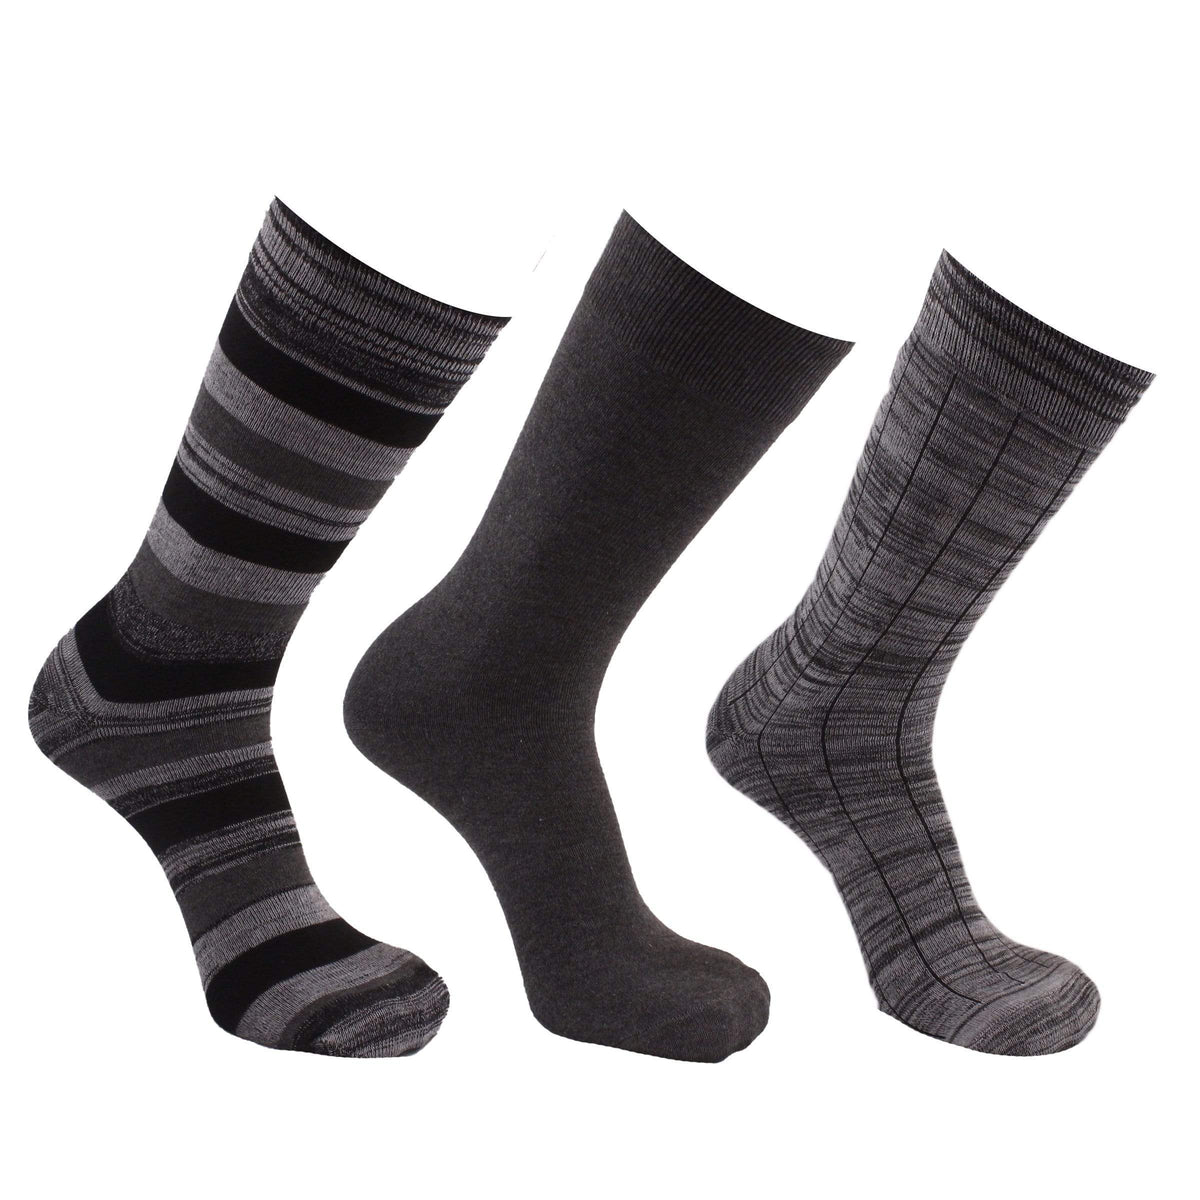 Marled Rib 3 Pack Crew Socks Black / Grey